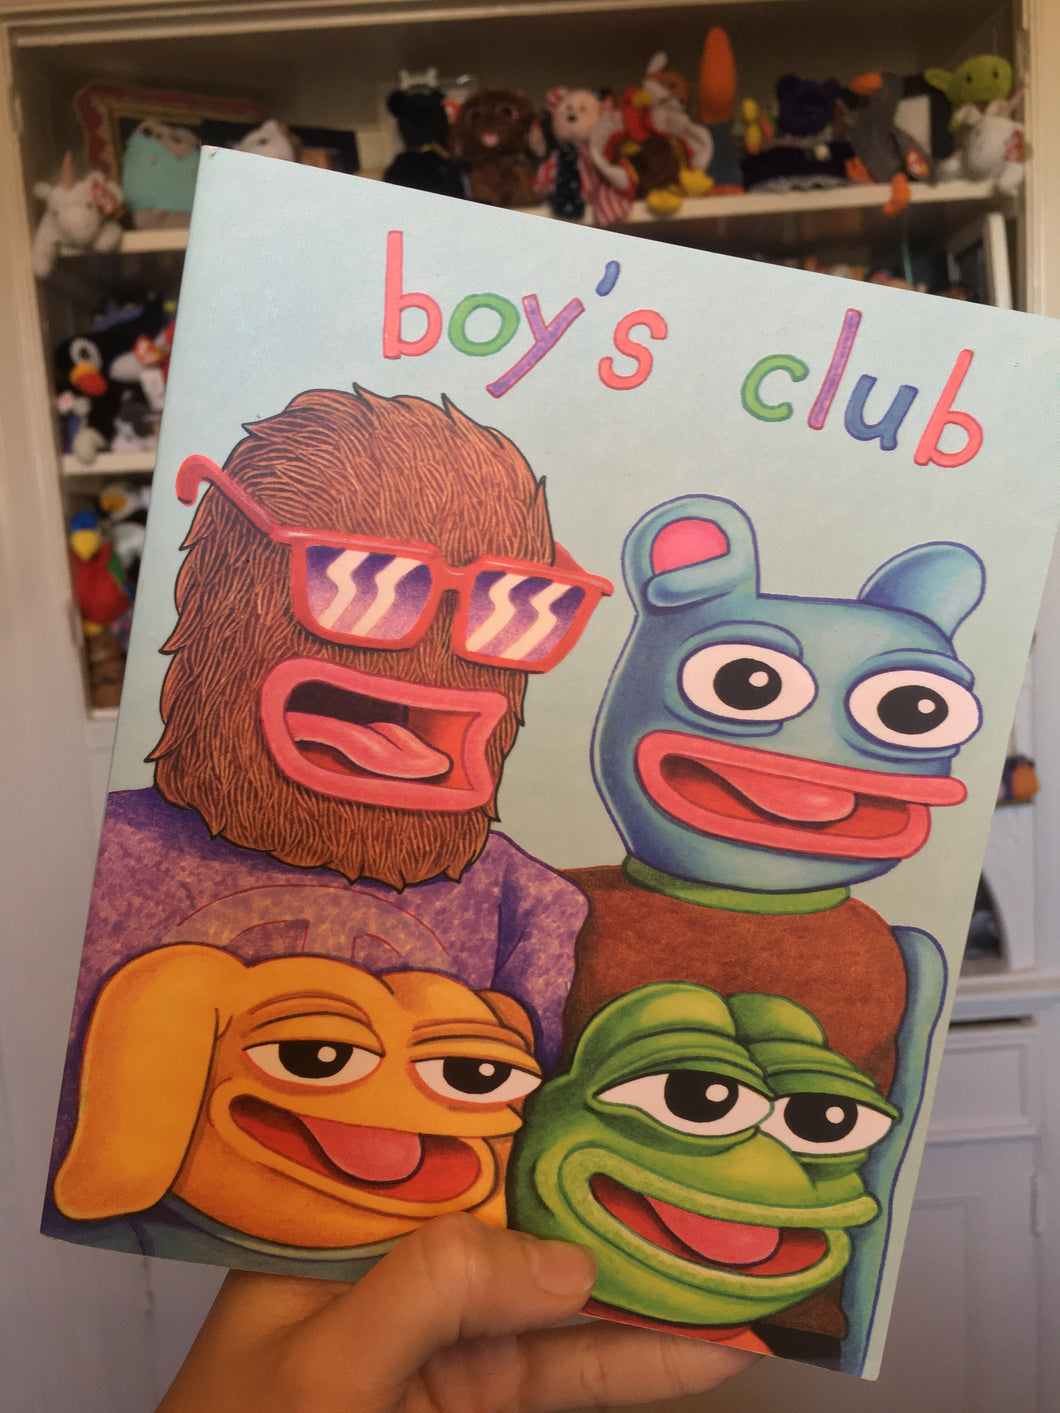 Boy's Club by Matt Furie